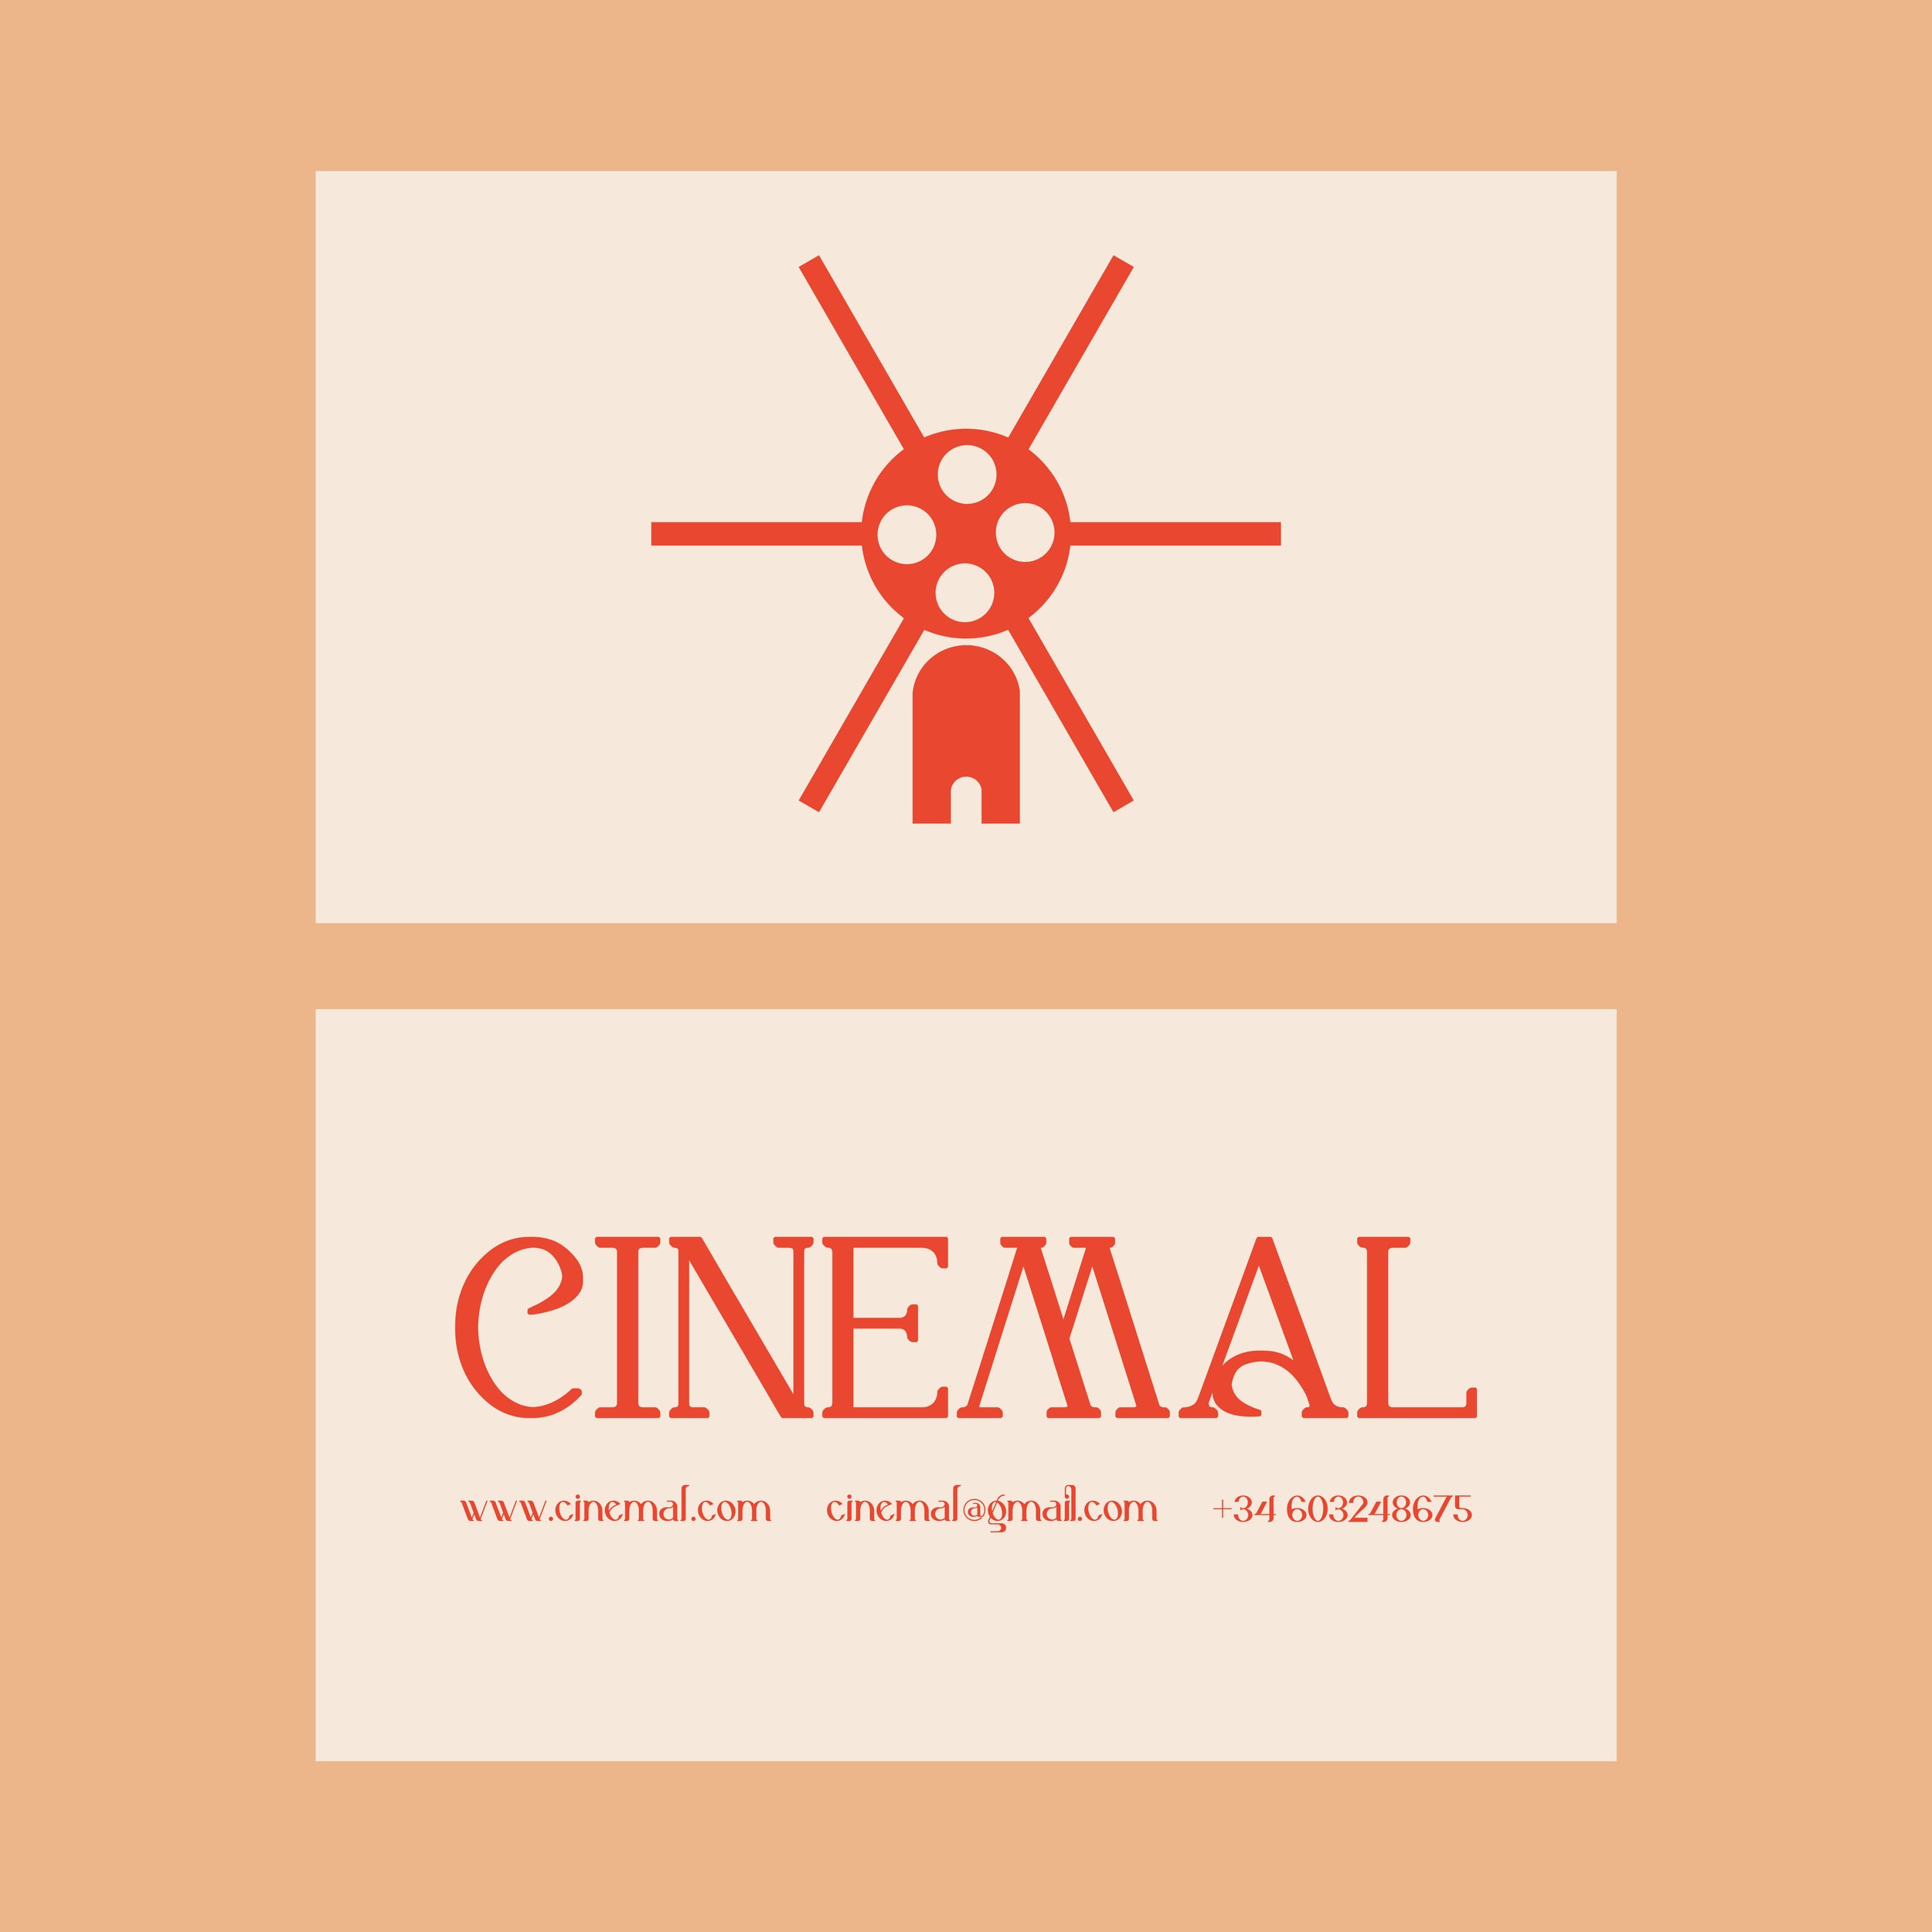 CINEMAL BUSINESS CARDS 1.jpg